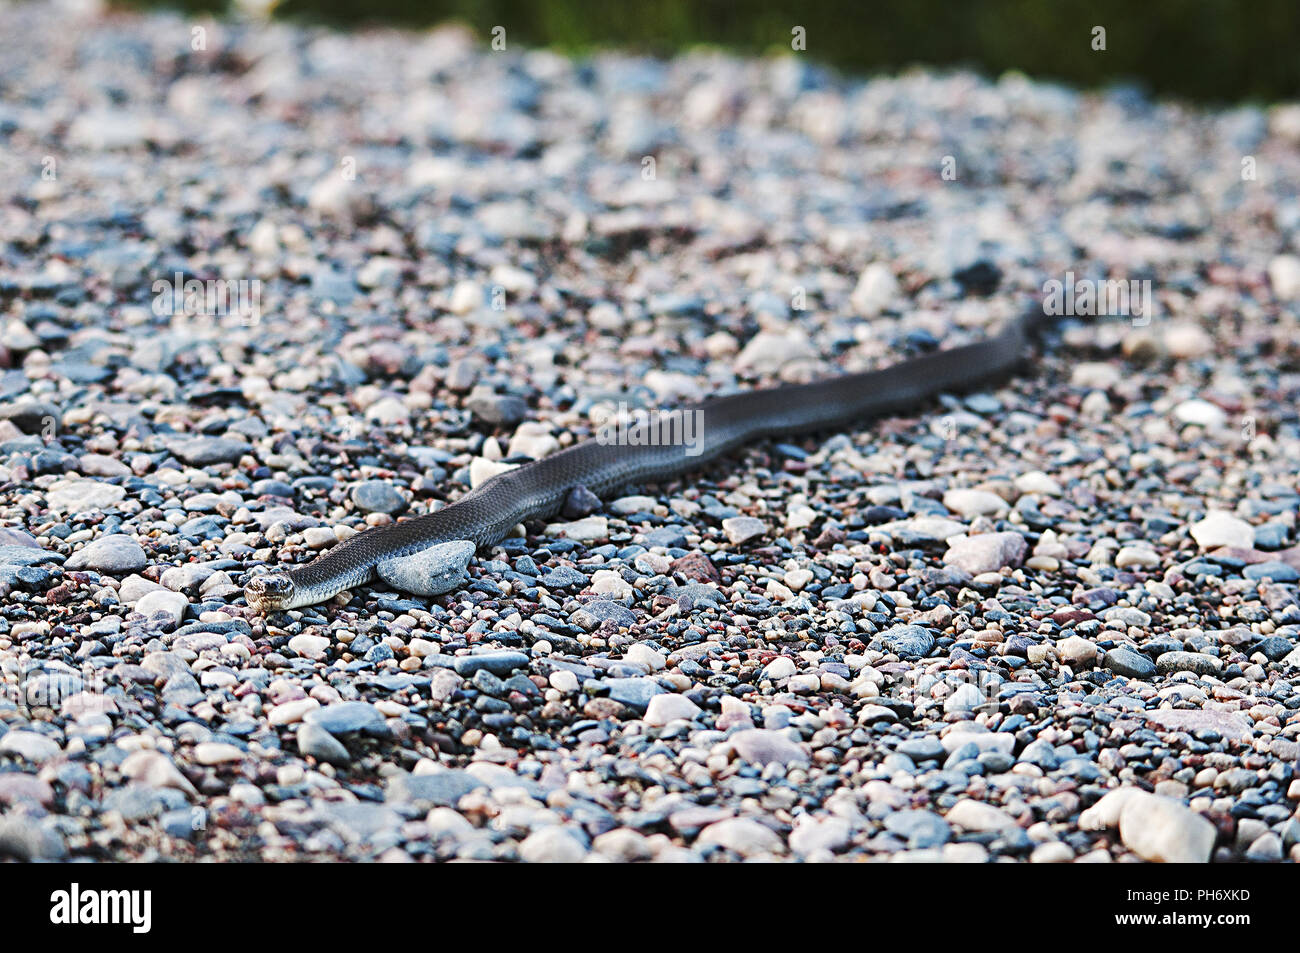 Water snake enjoying its surrounding. Stock Photo